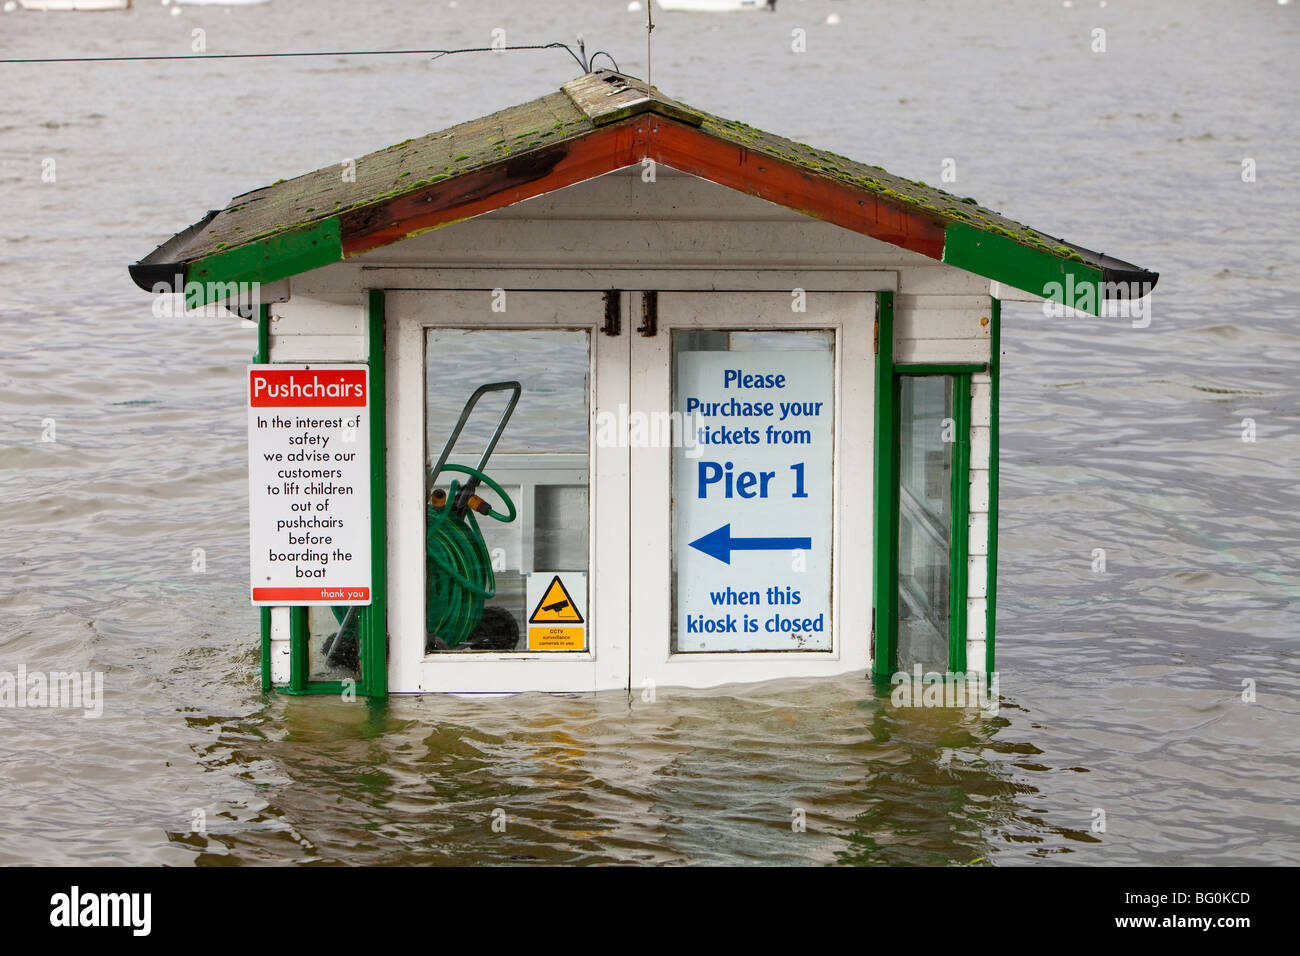 A kiosk on Windermere in Ambleside during the devastating November 2009 floods, Cumbria, UK. Stock Photo